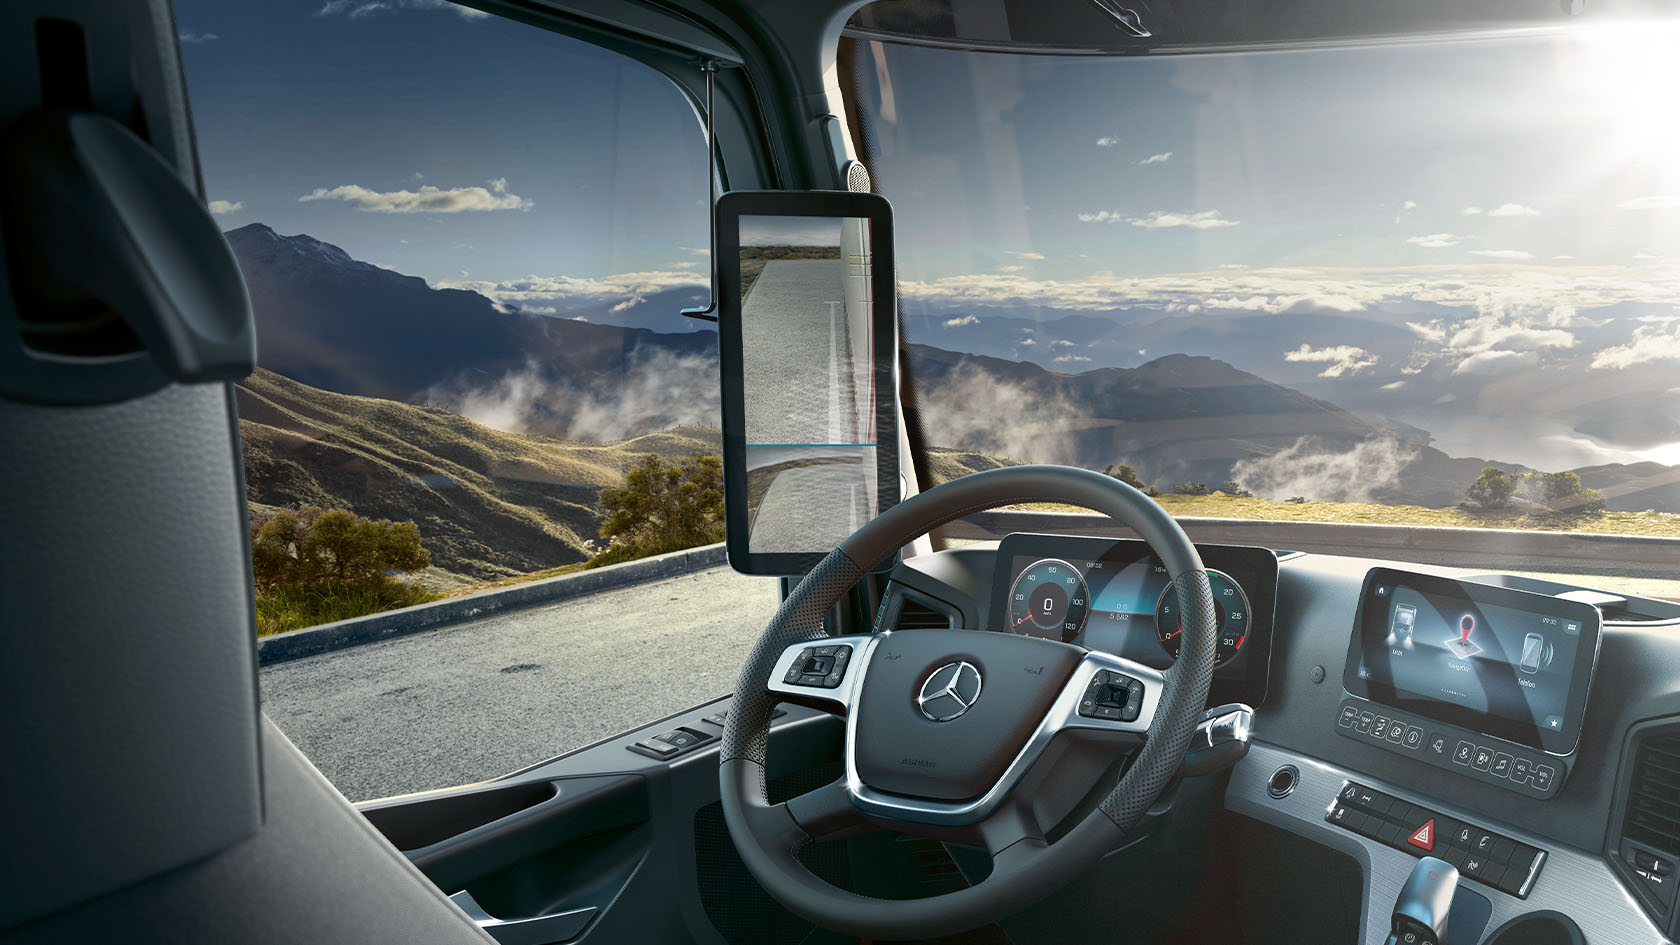 Arocs: Arbeitsplatz, Interieur - Mercedes-Benz Trucks - Trucks you